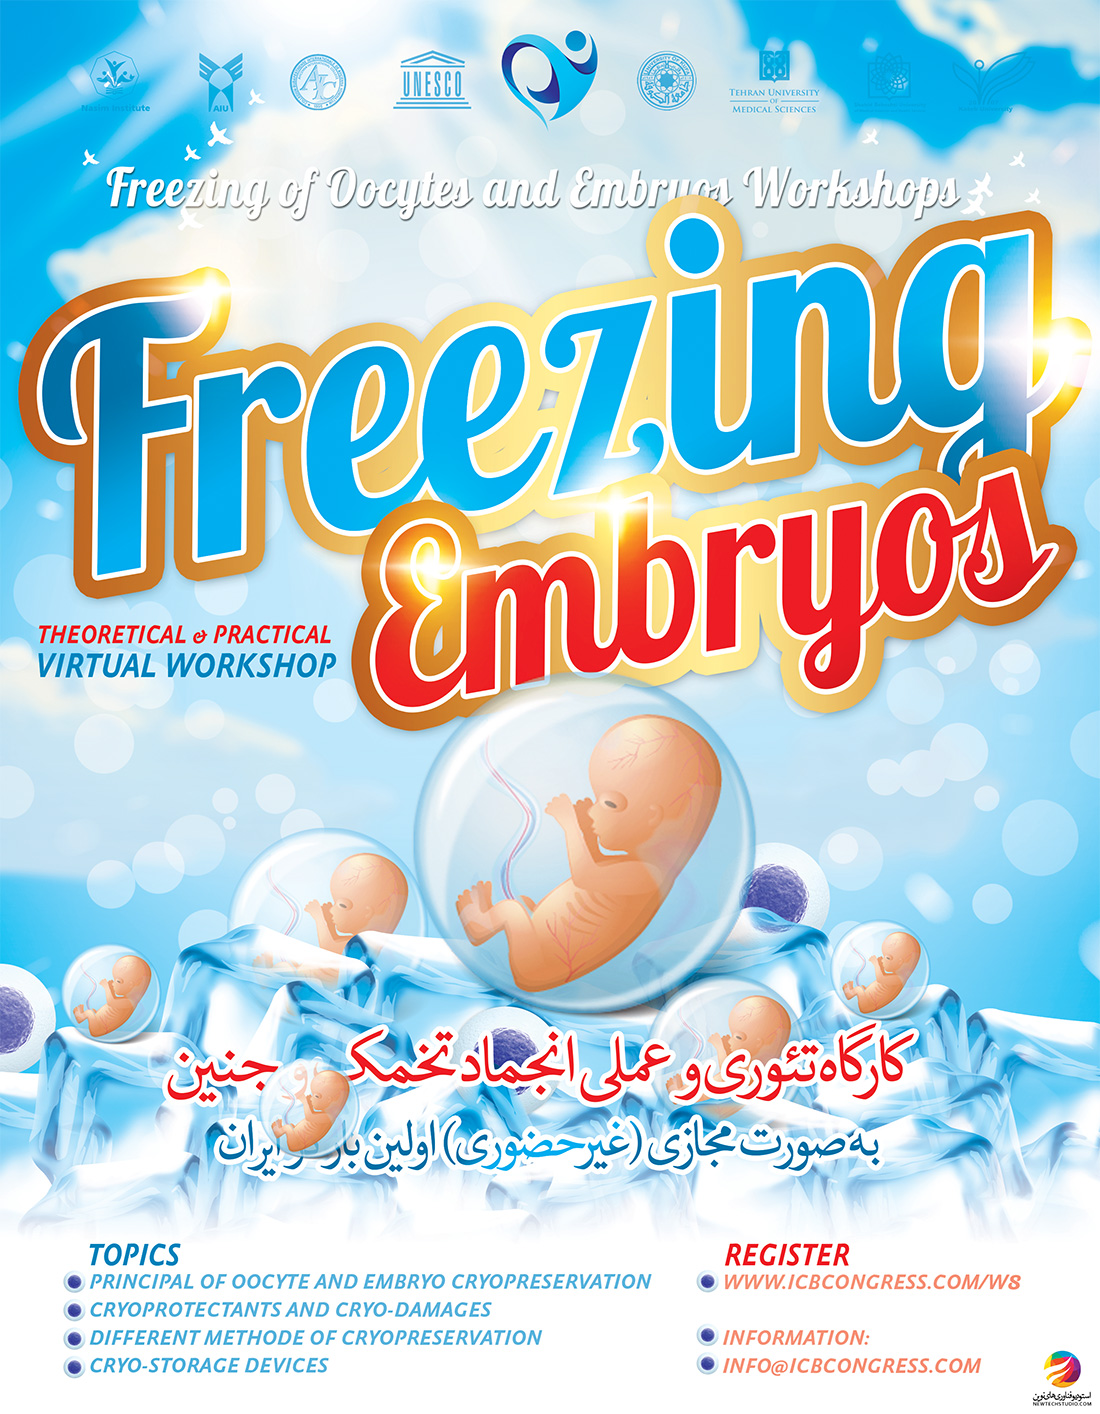 Freezing of Oocytes and Embryos Workshops